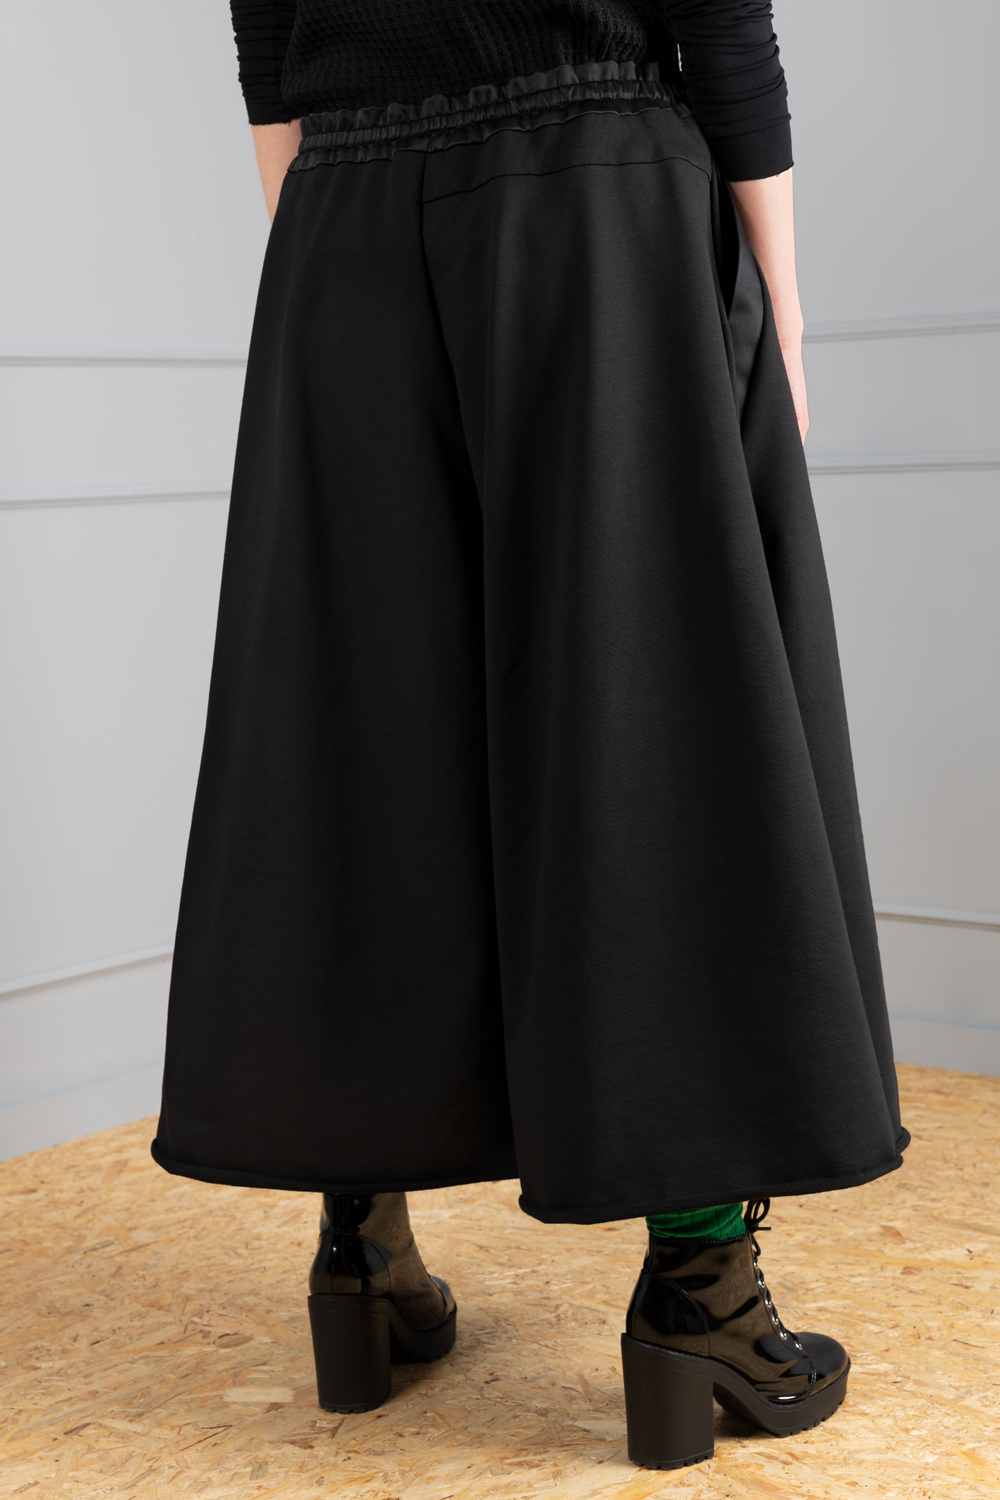 https://usercontent.one/wp/www.haruco-vert.com/wp-content/uploads/2021/02/Black_wide_skirt_trousers_women_Haruco-vert_2.jpg?media=1704461213